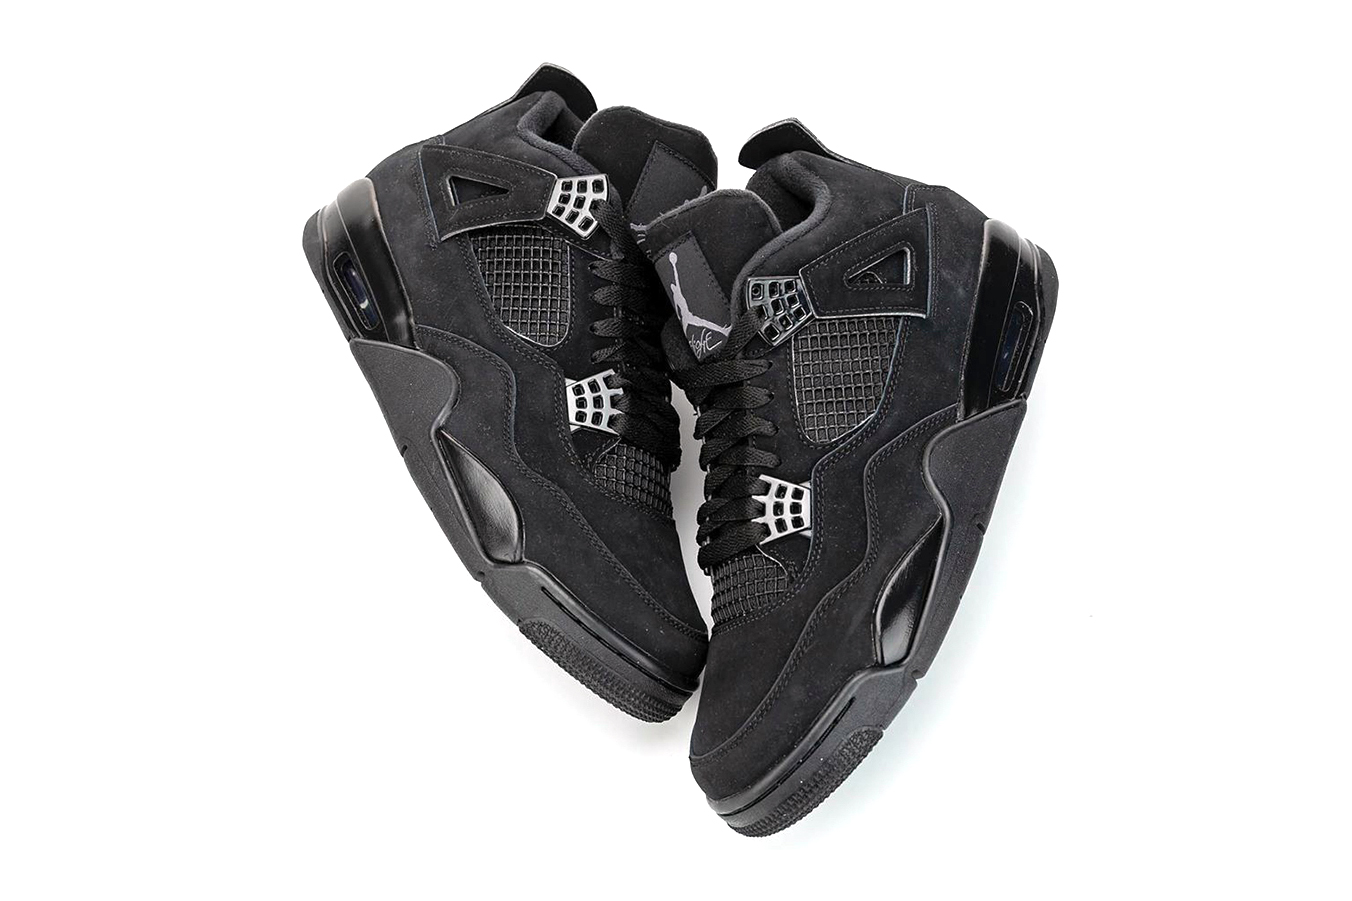 Shoes Mens Shoes Sneakers & Athletic Shoes Hi Tops Custom AJ4 Black Cats Size UK9 